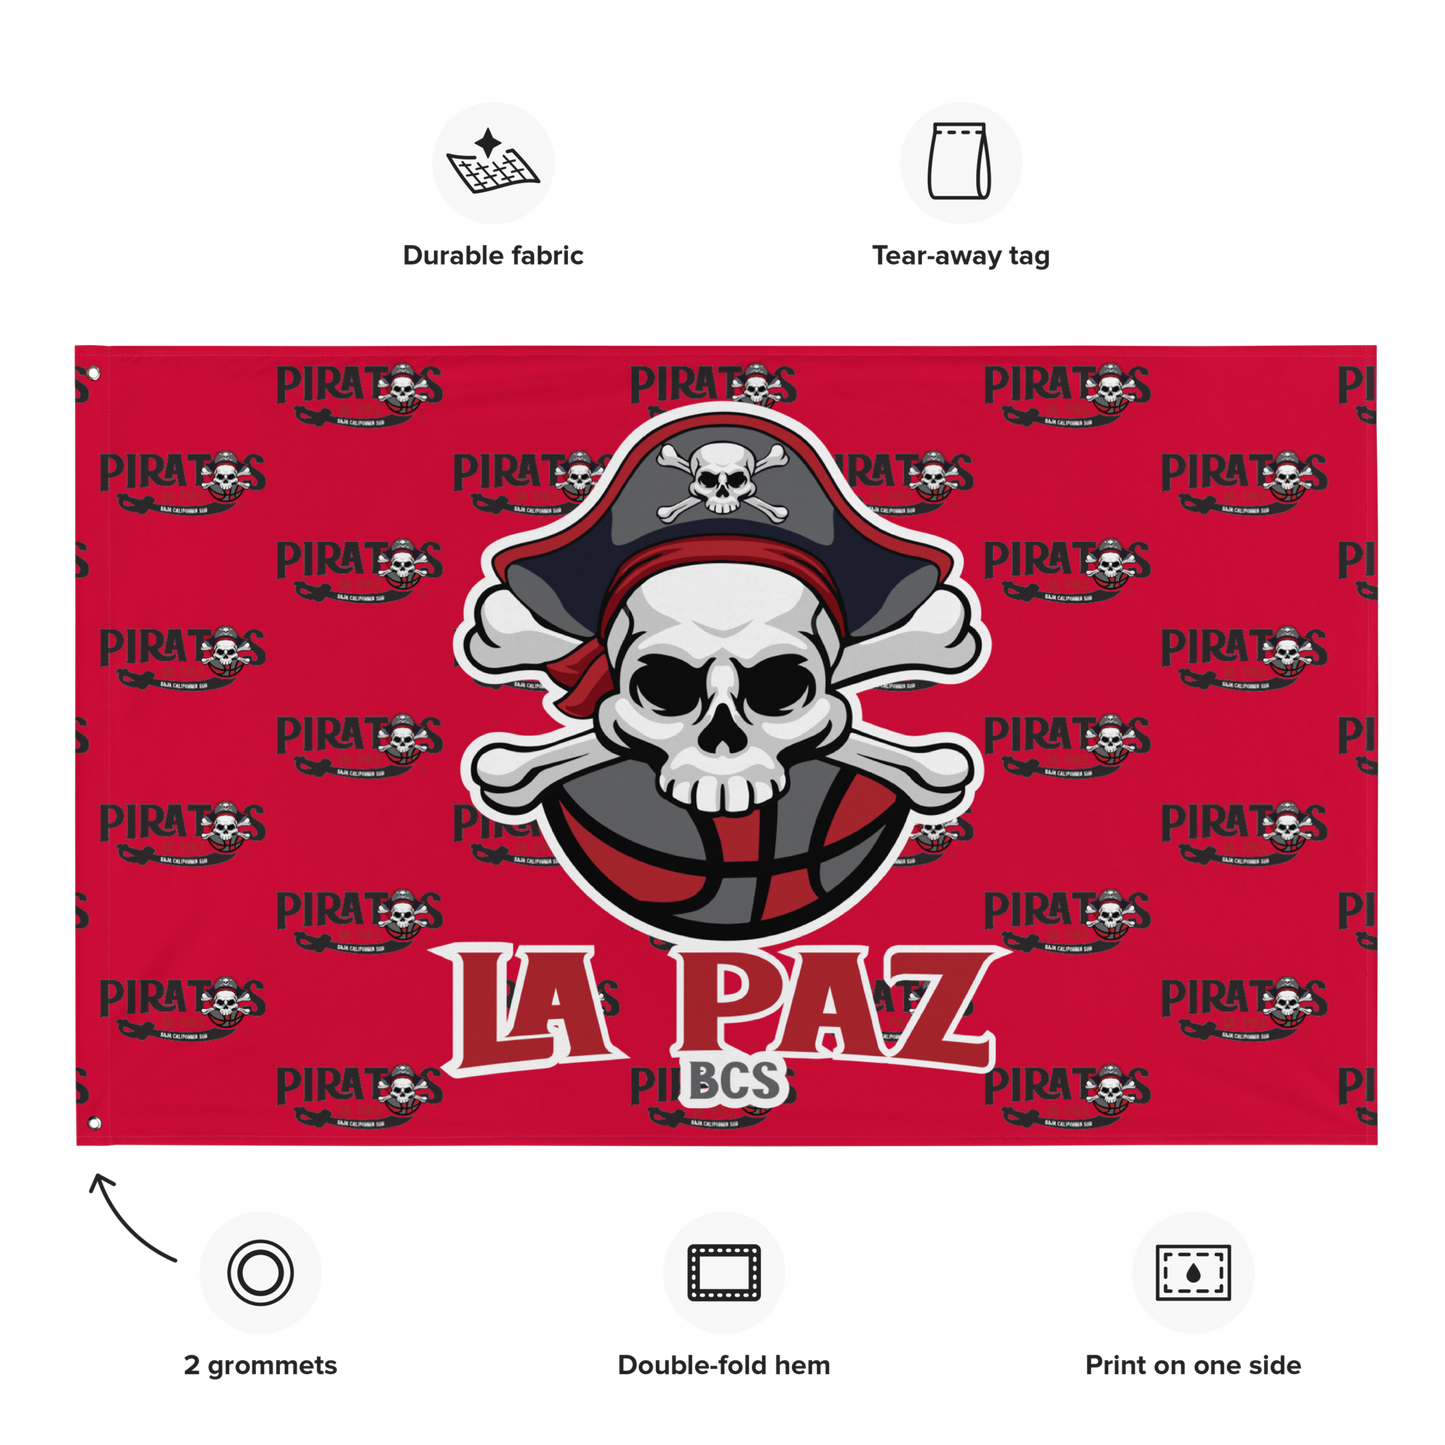 Introducing the Piratas de la Paz Fan Flag! 🏴‍☠️⚓"